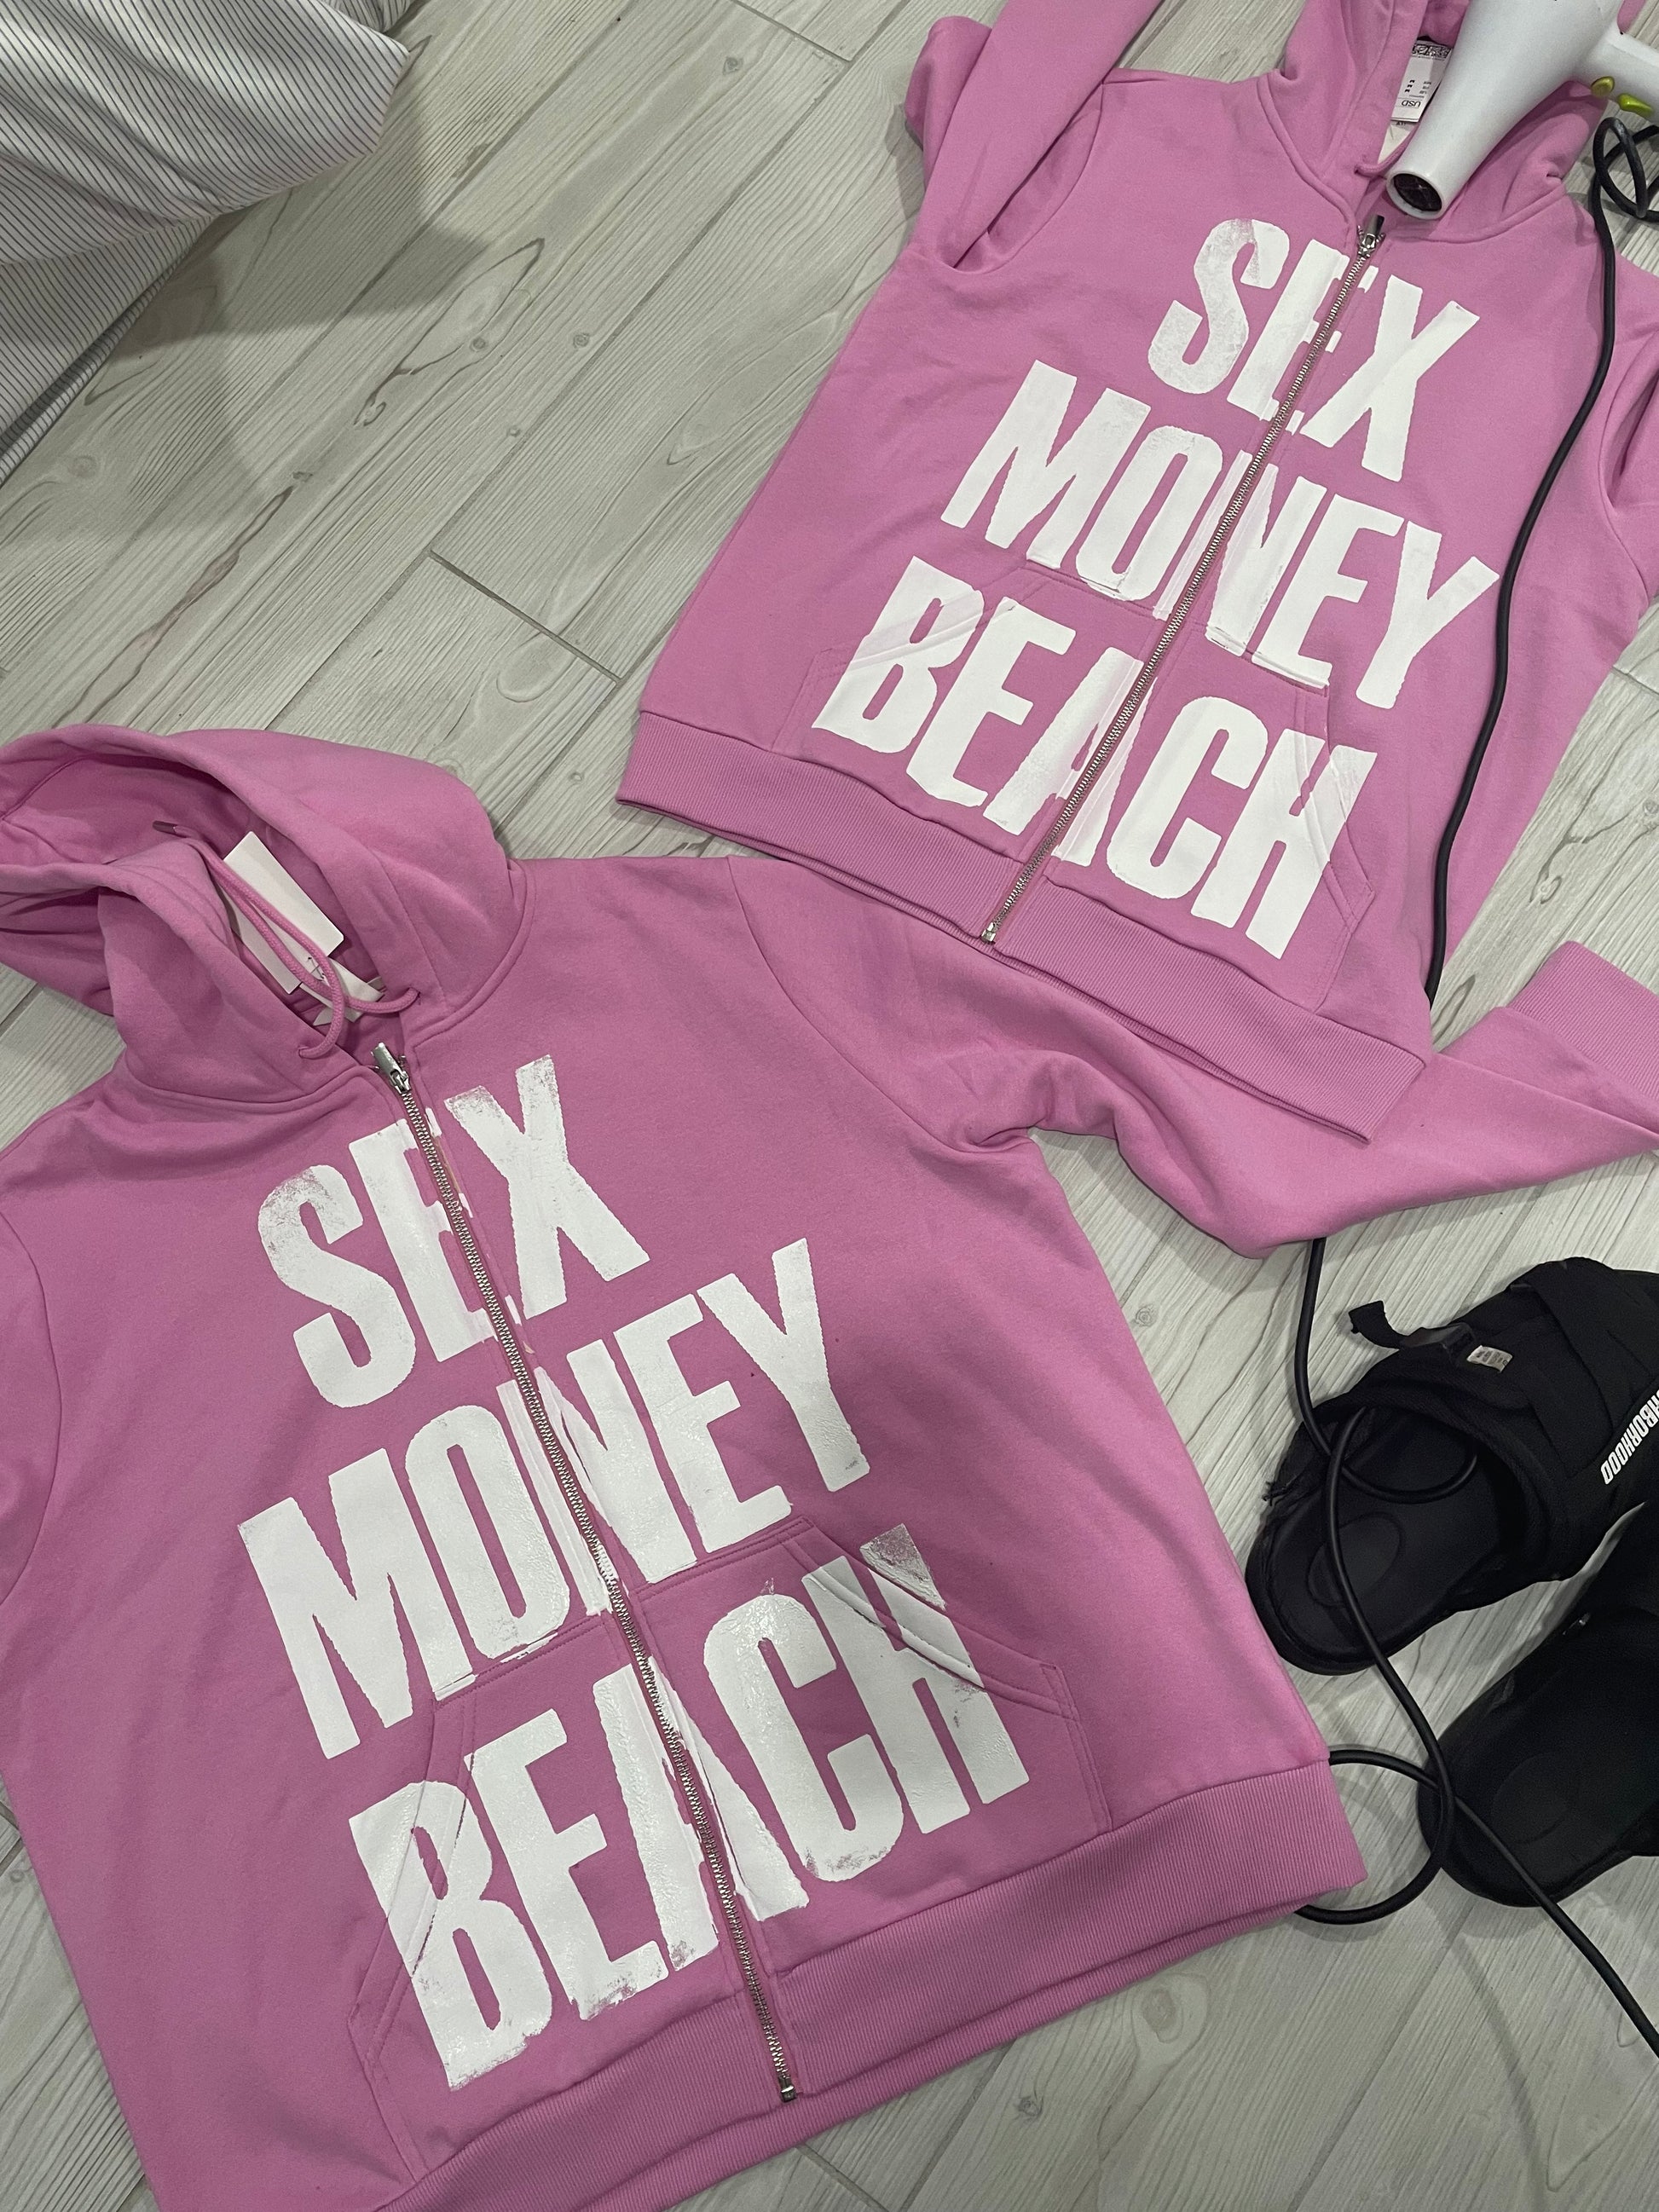 SEX MONEY BEACH HOODIE – Beachside Boys